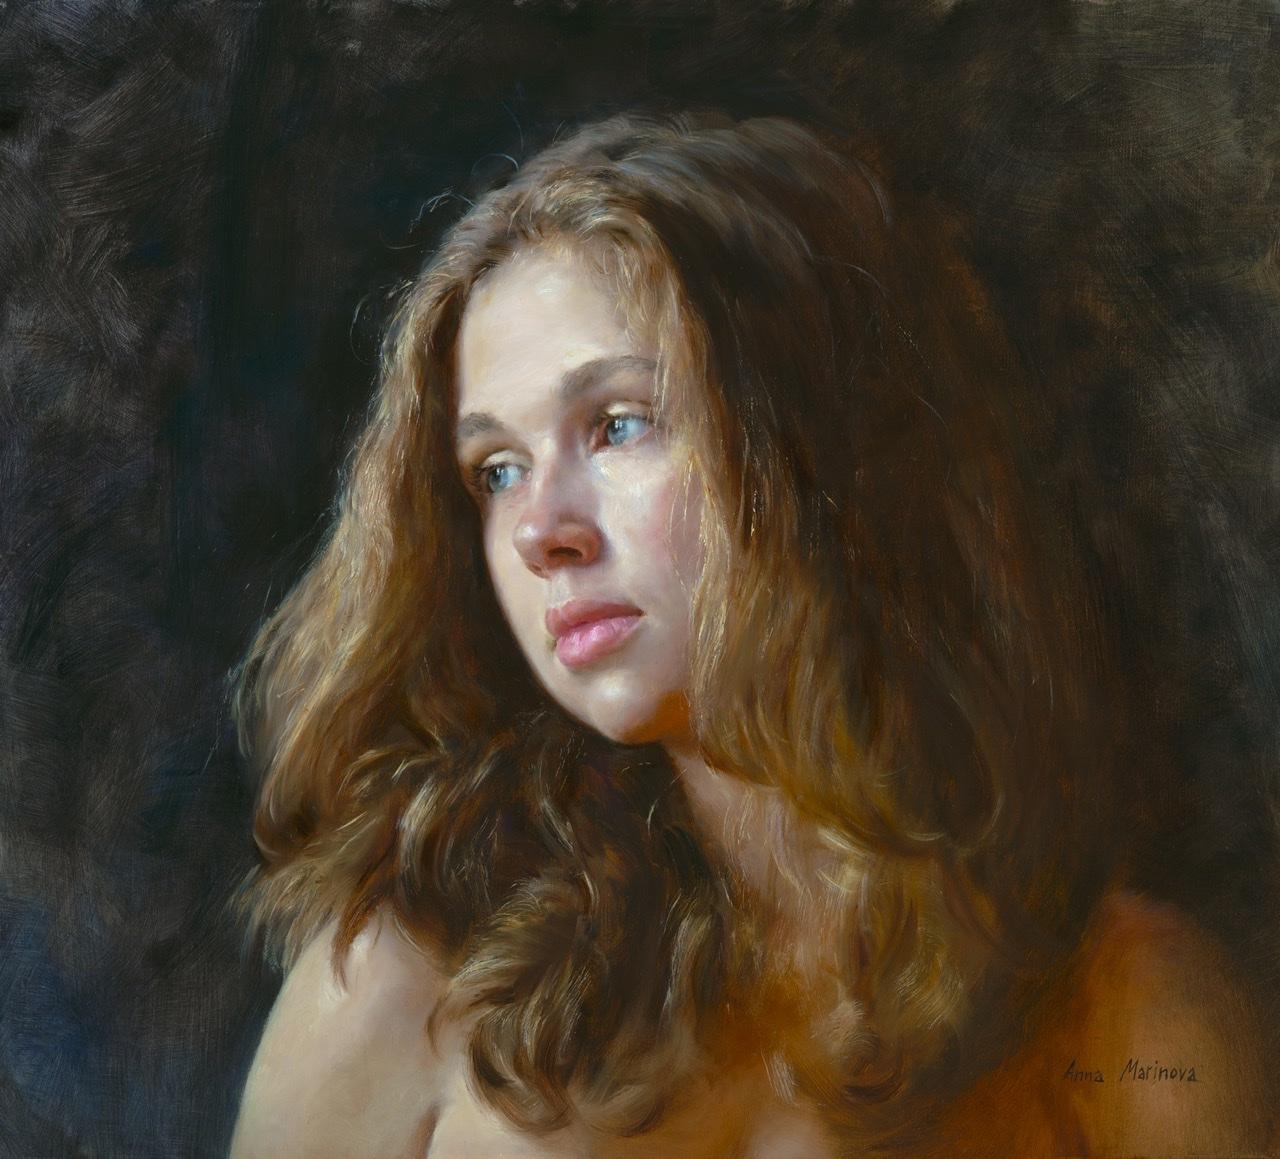 Маринова Анна. Original modern art painting